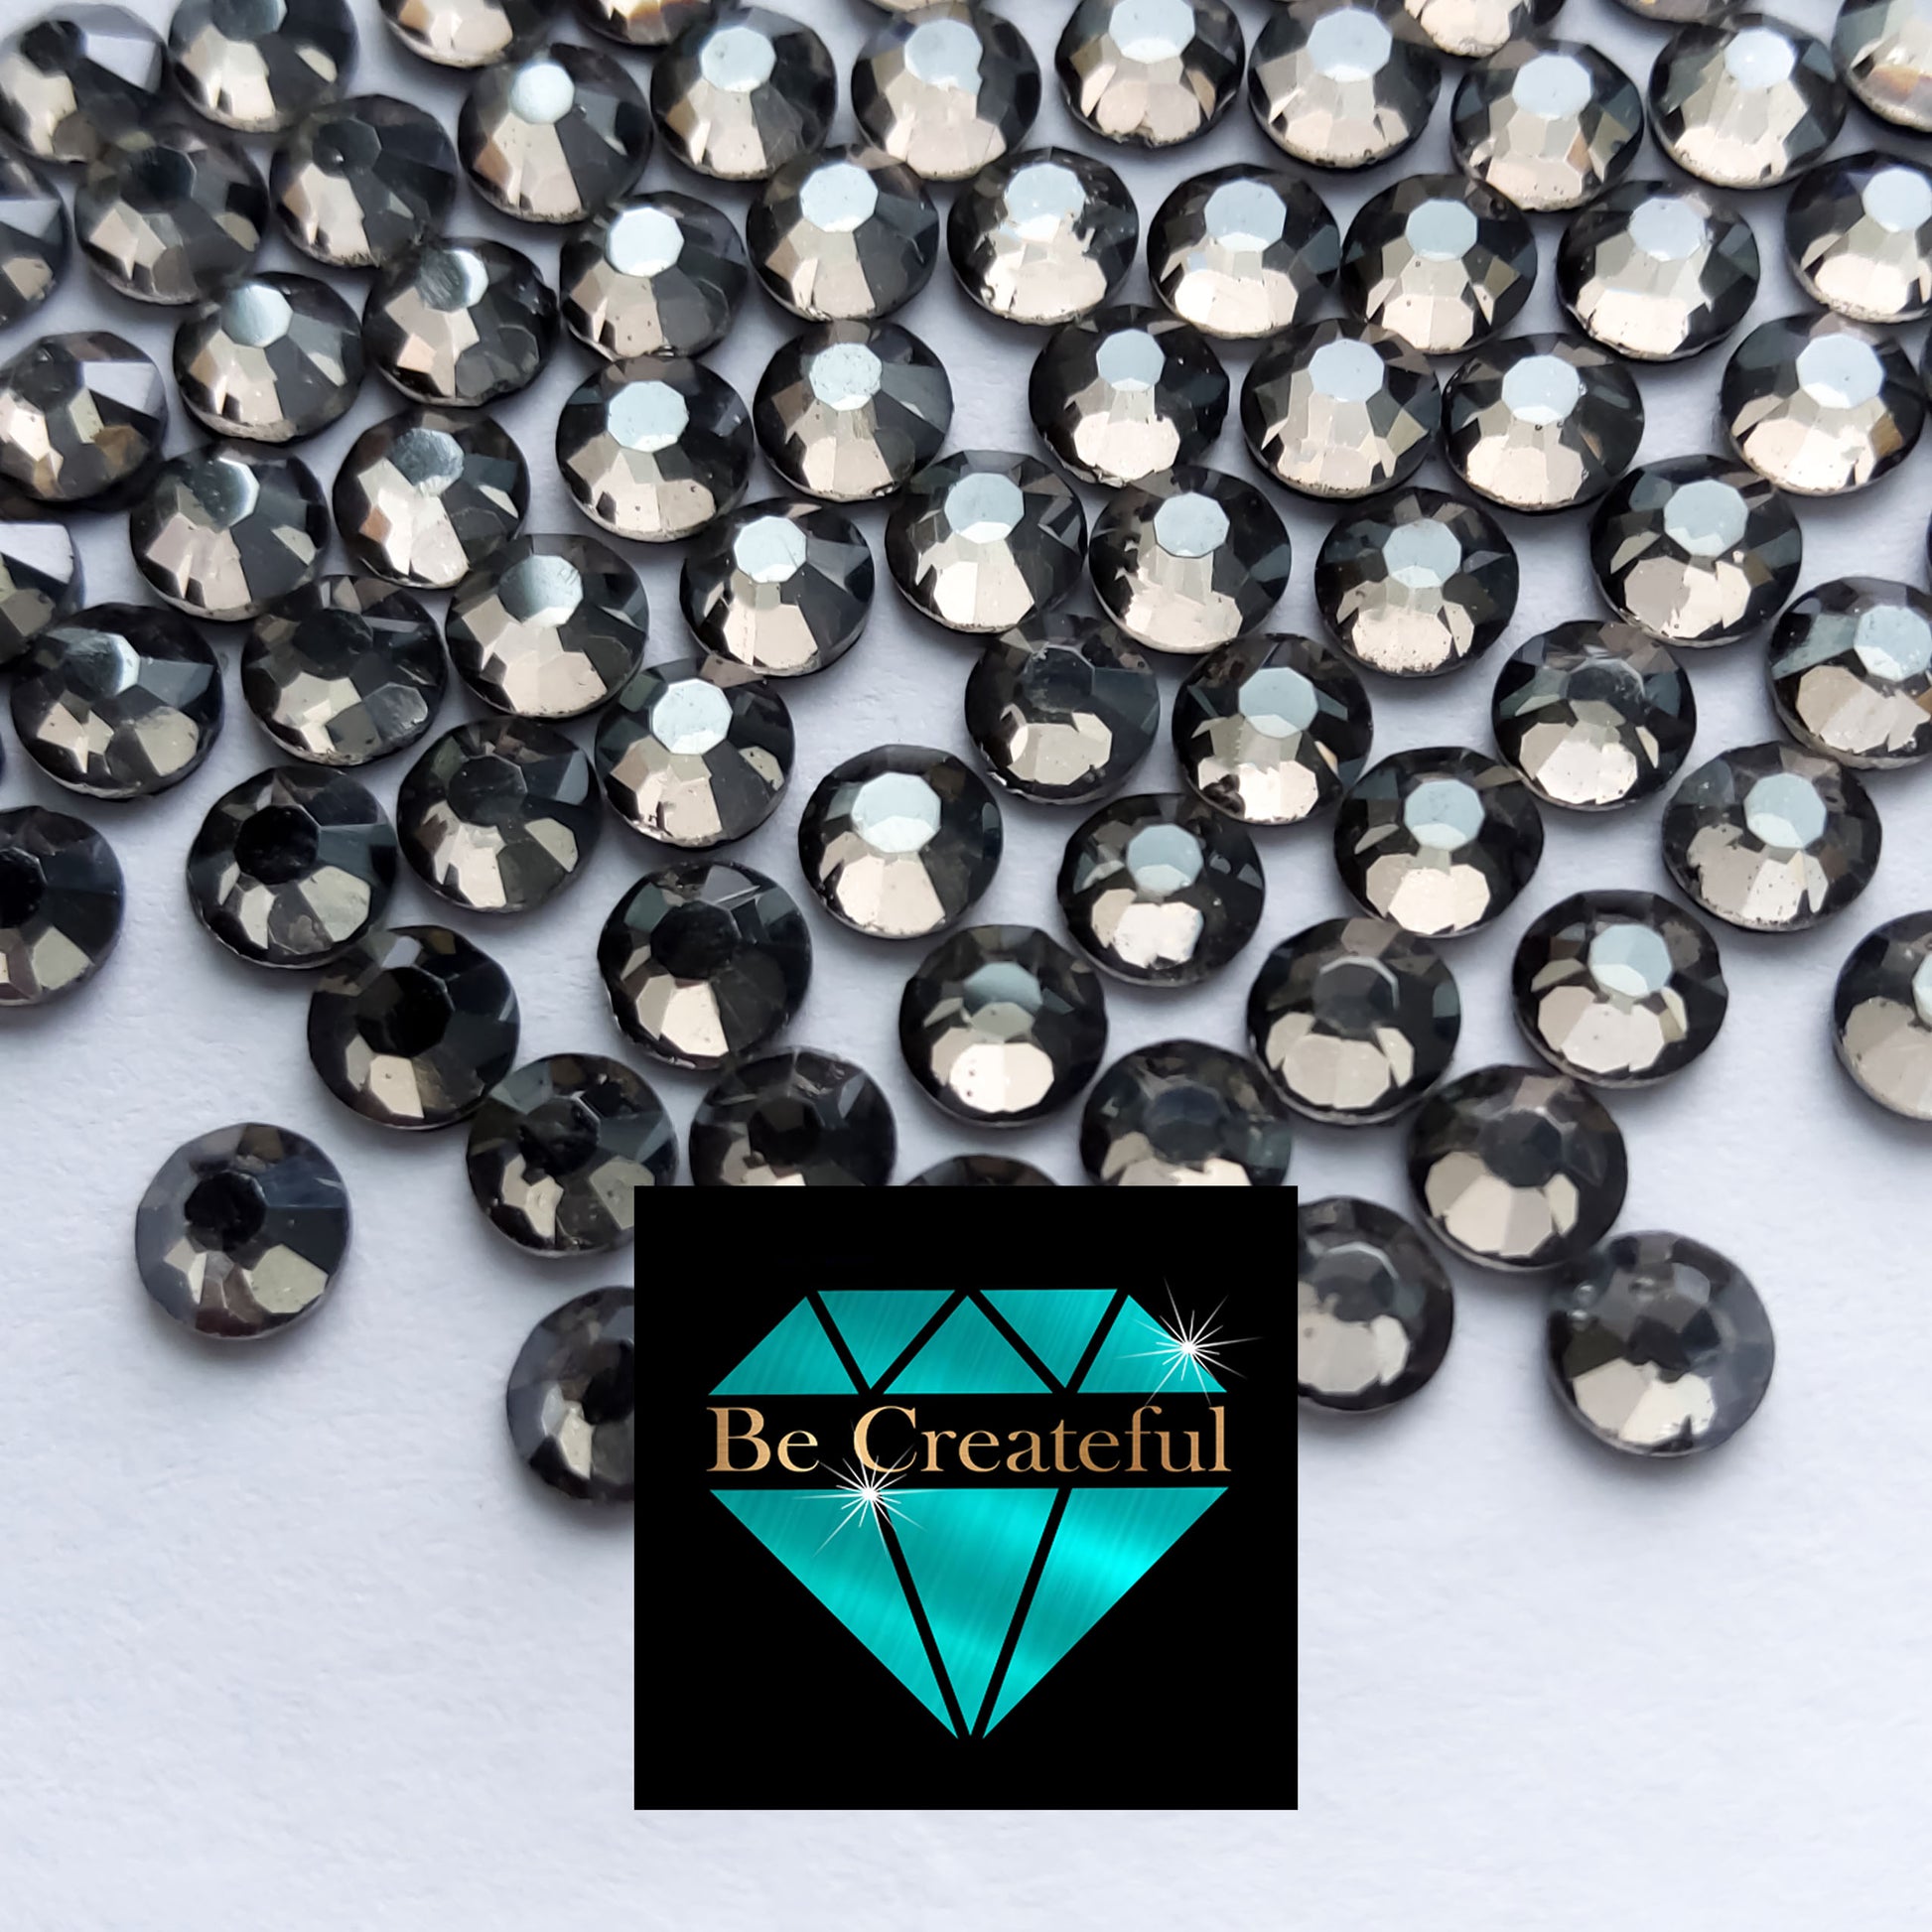 DMC Black Diamond Glass Hotfix Rhinestones - Be Createful, Beautiful Rhinestones at wholesale prices.